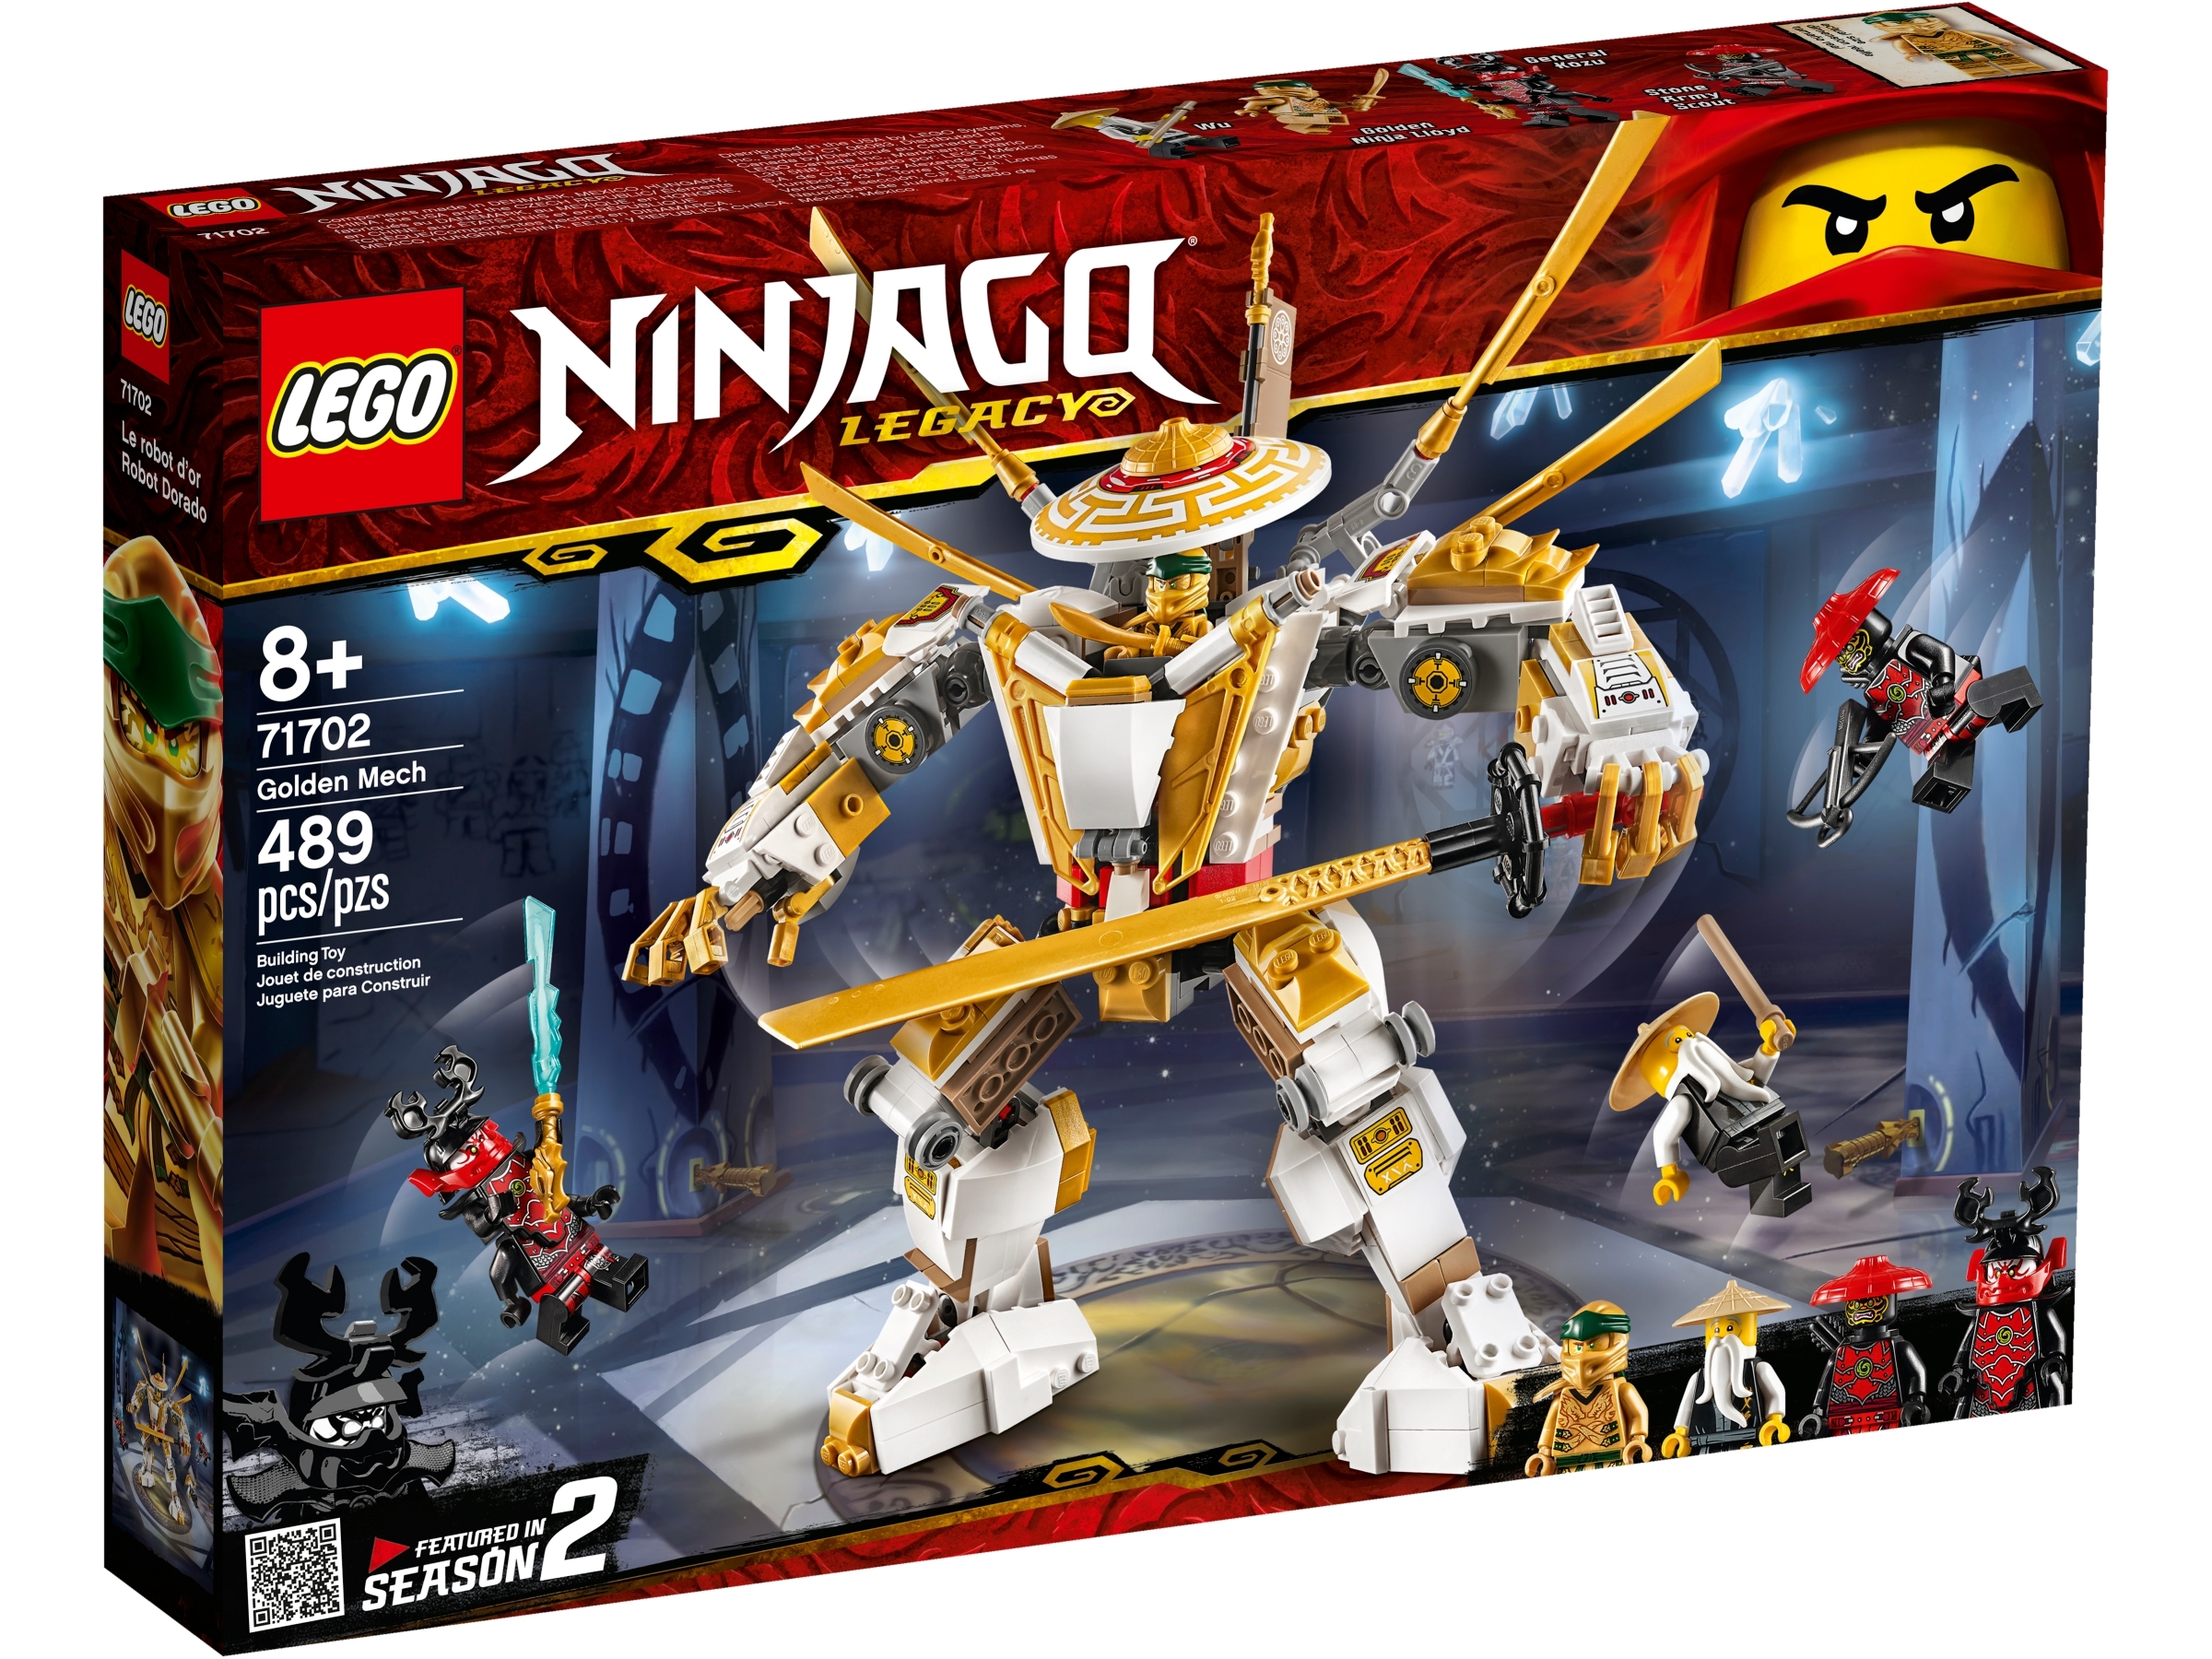 every lego ninjago set